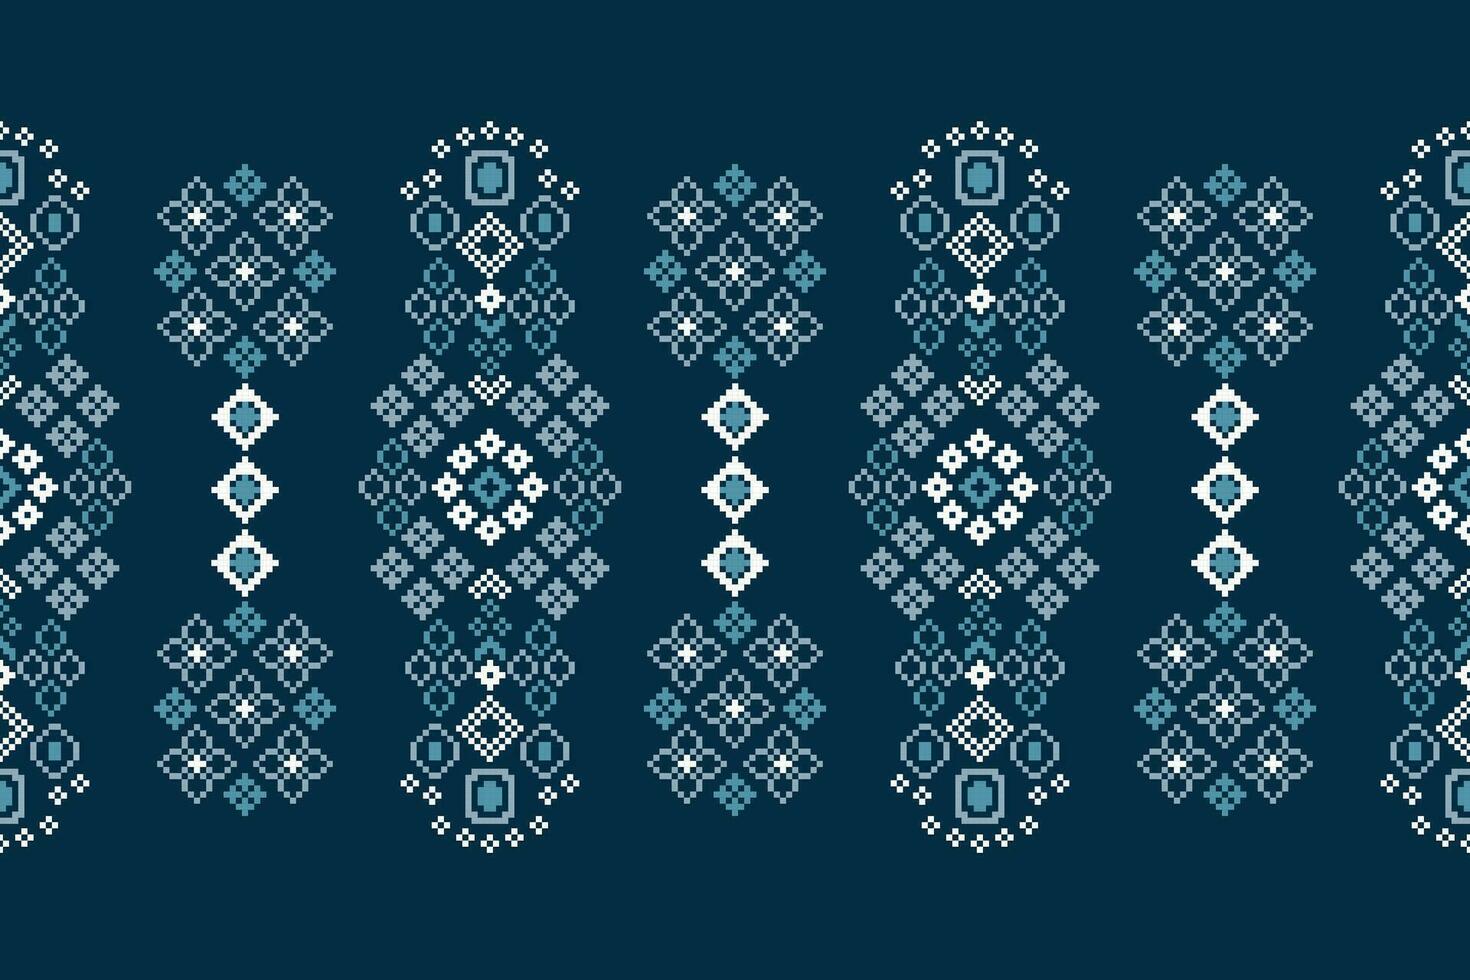 étnico geométrico tela modelo cruzar puntada.ikat bordado étnico oriental píxel modelo azul antecedentes. resumen, vector, ilustración. textura,ropa,marco,decoración,motivos,seda fondo de pantalla. vector